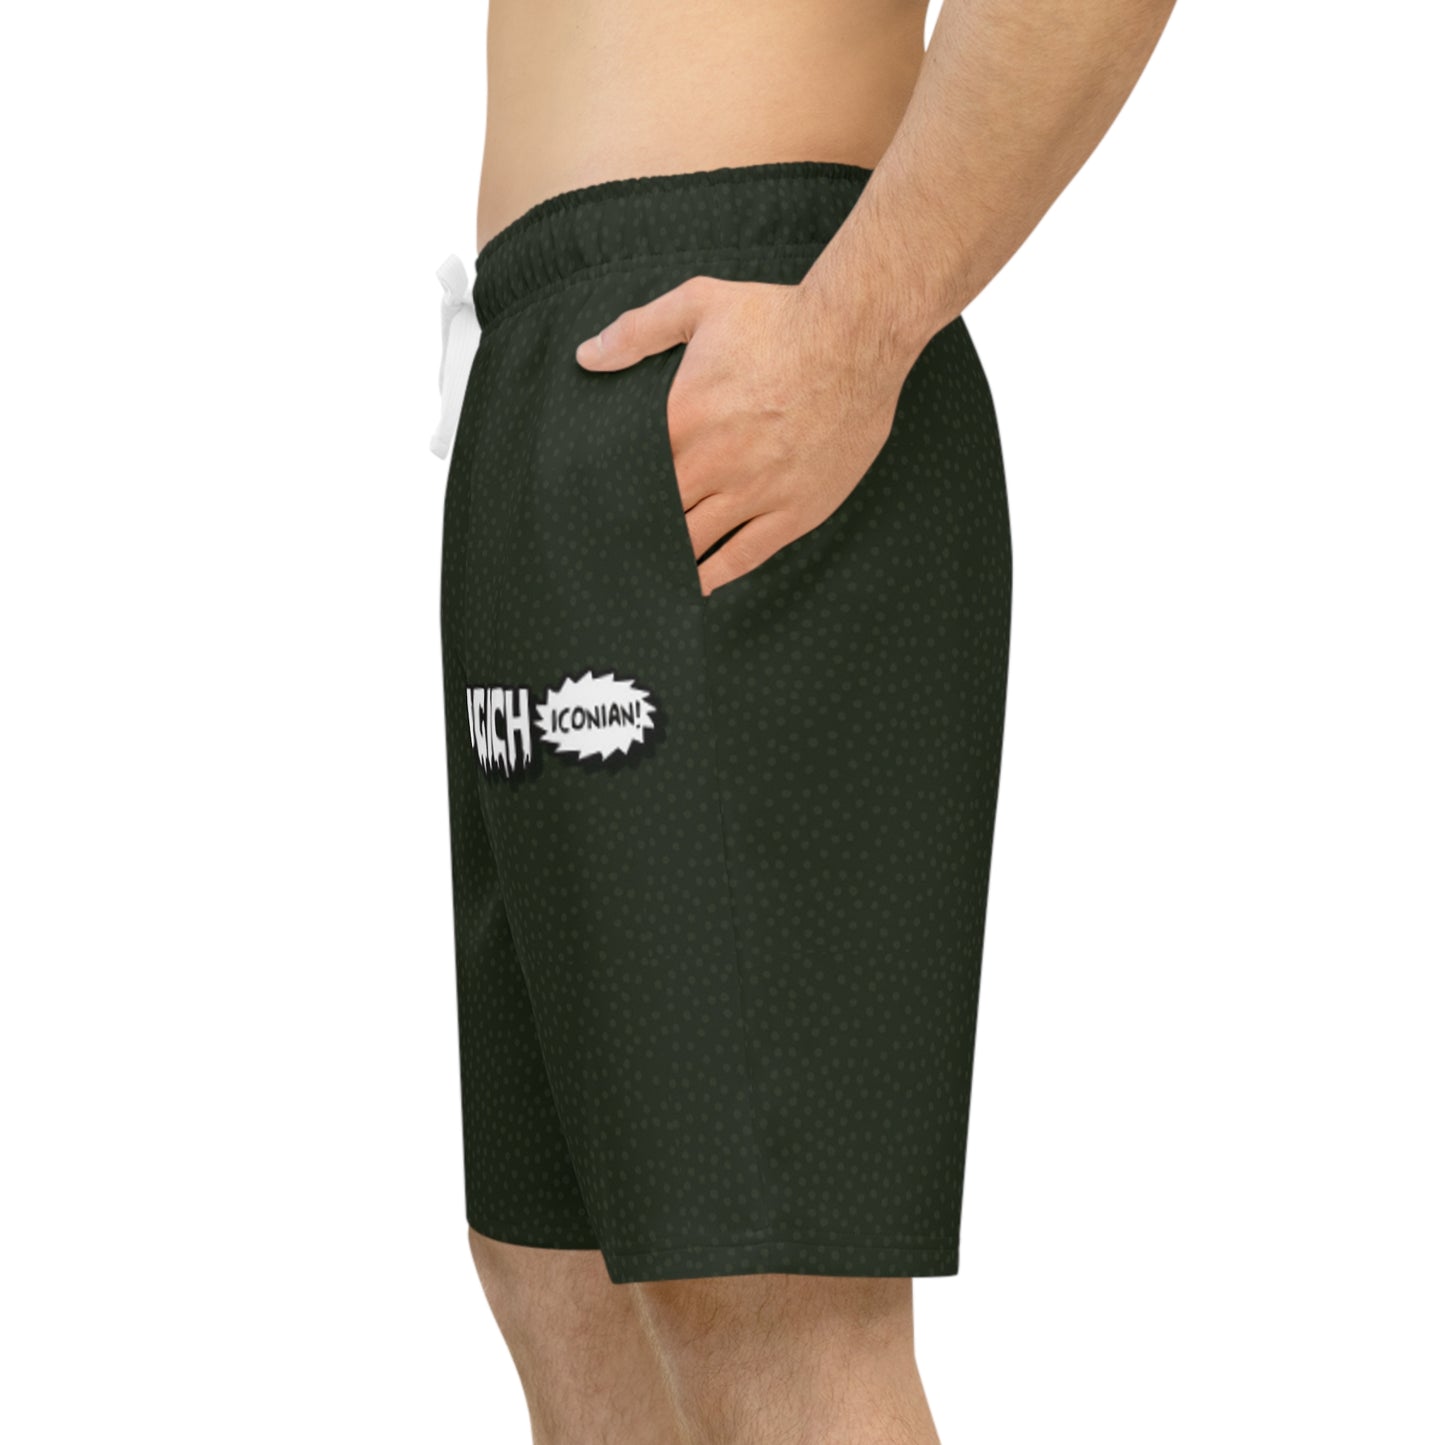 ECELUGICH Athletic Long Shorts